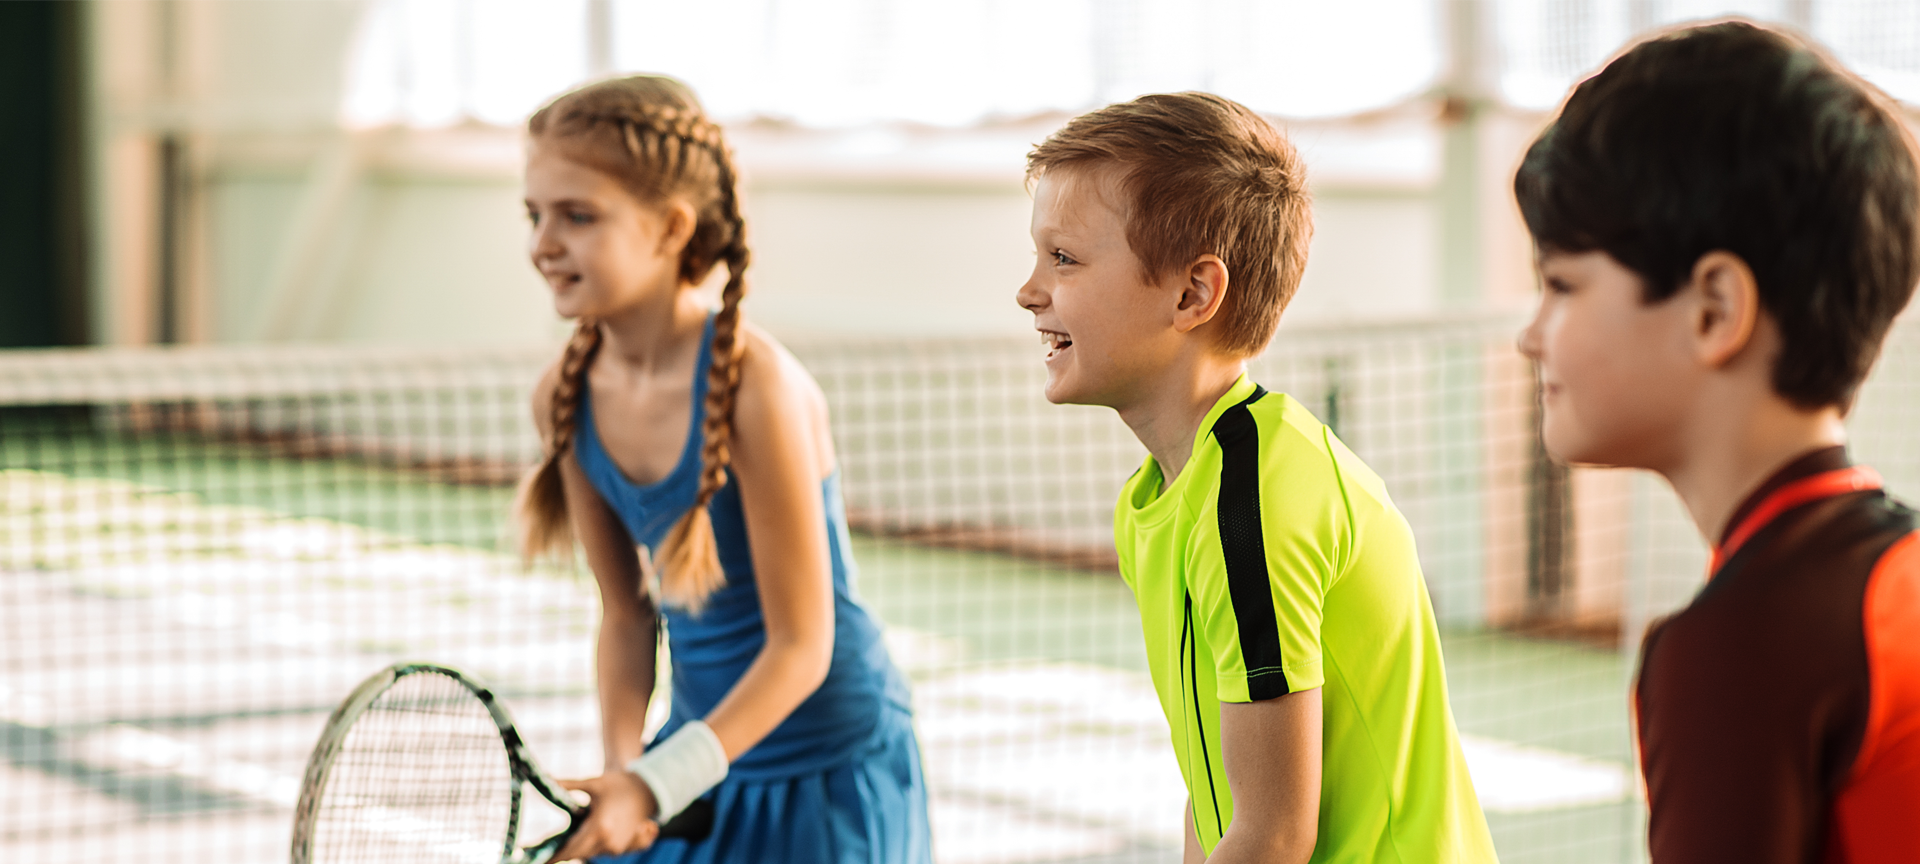 Children in a tennis lesson